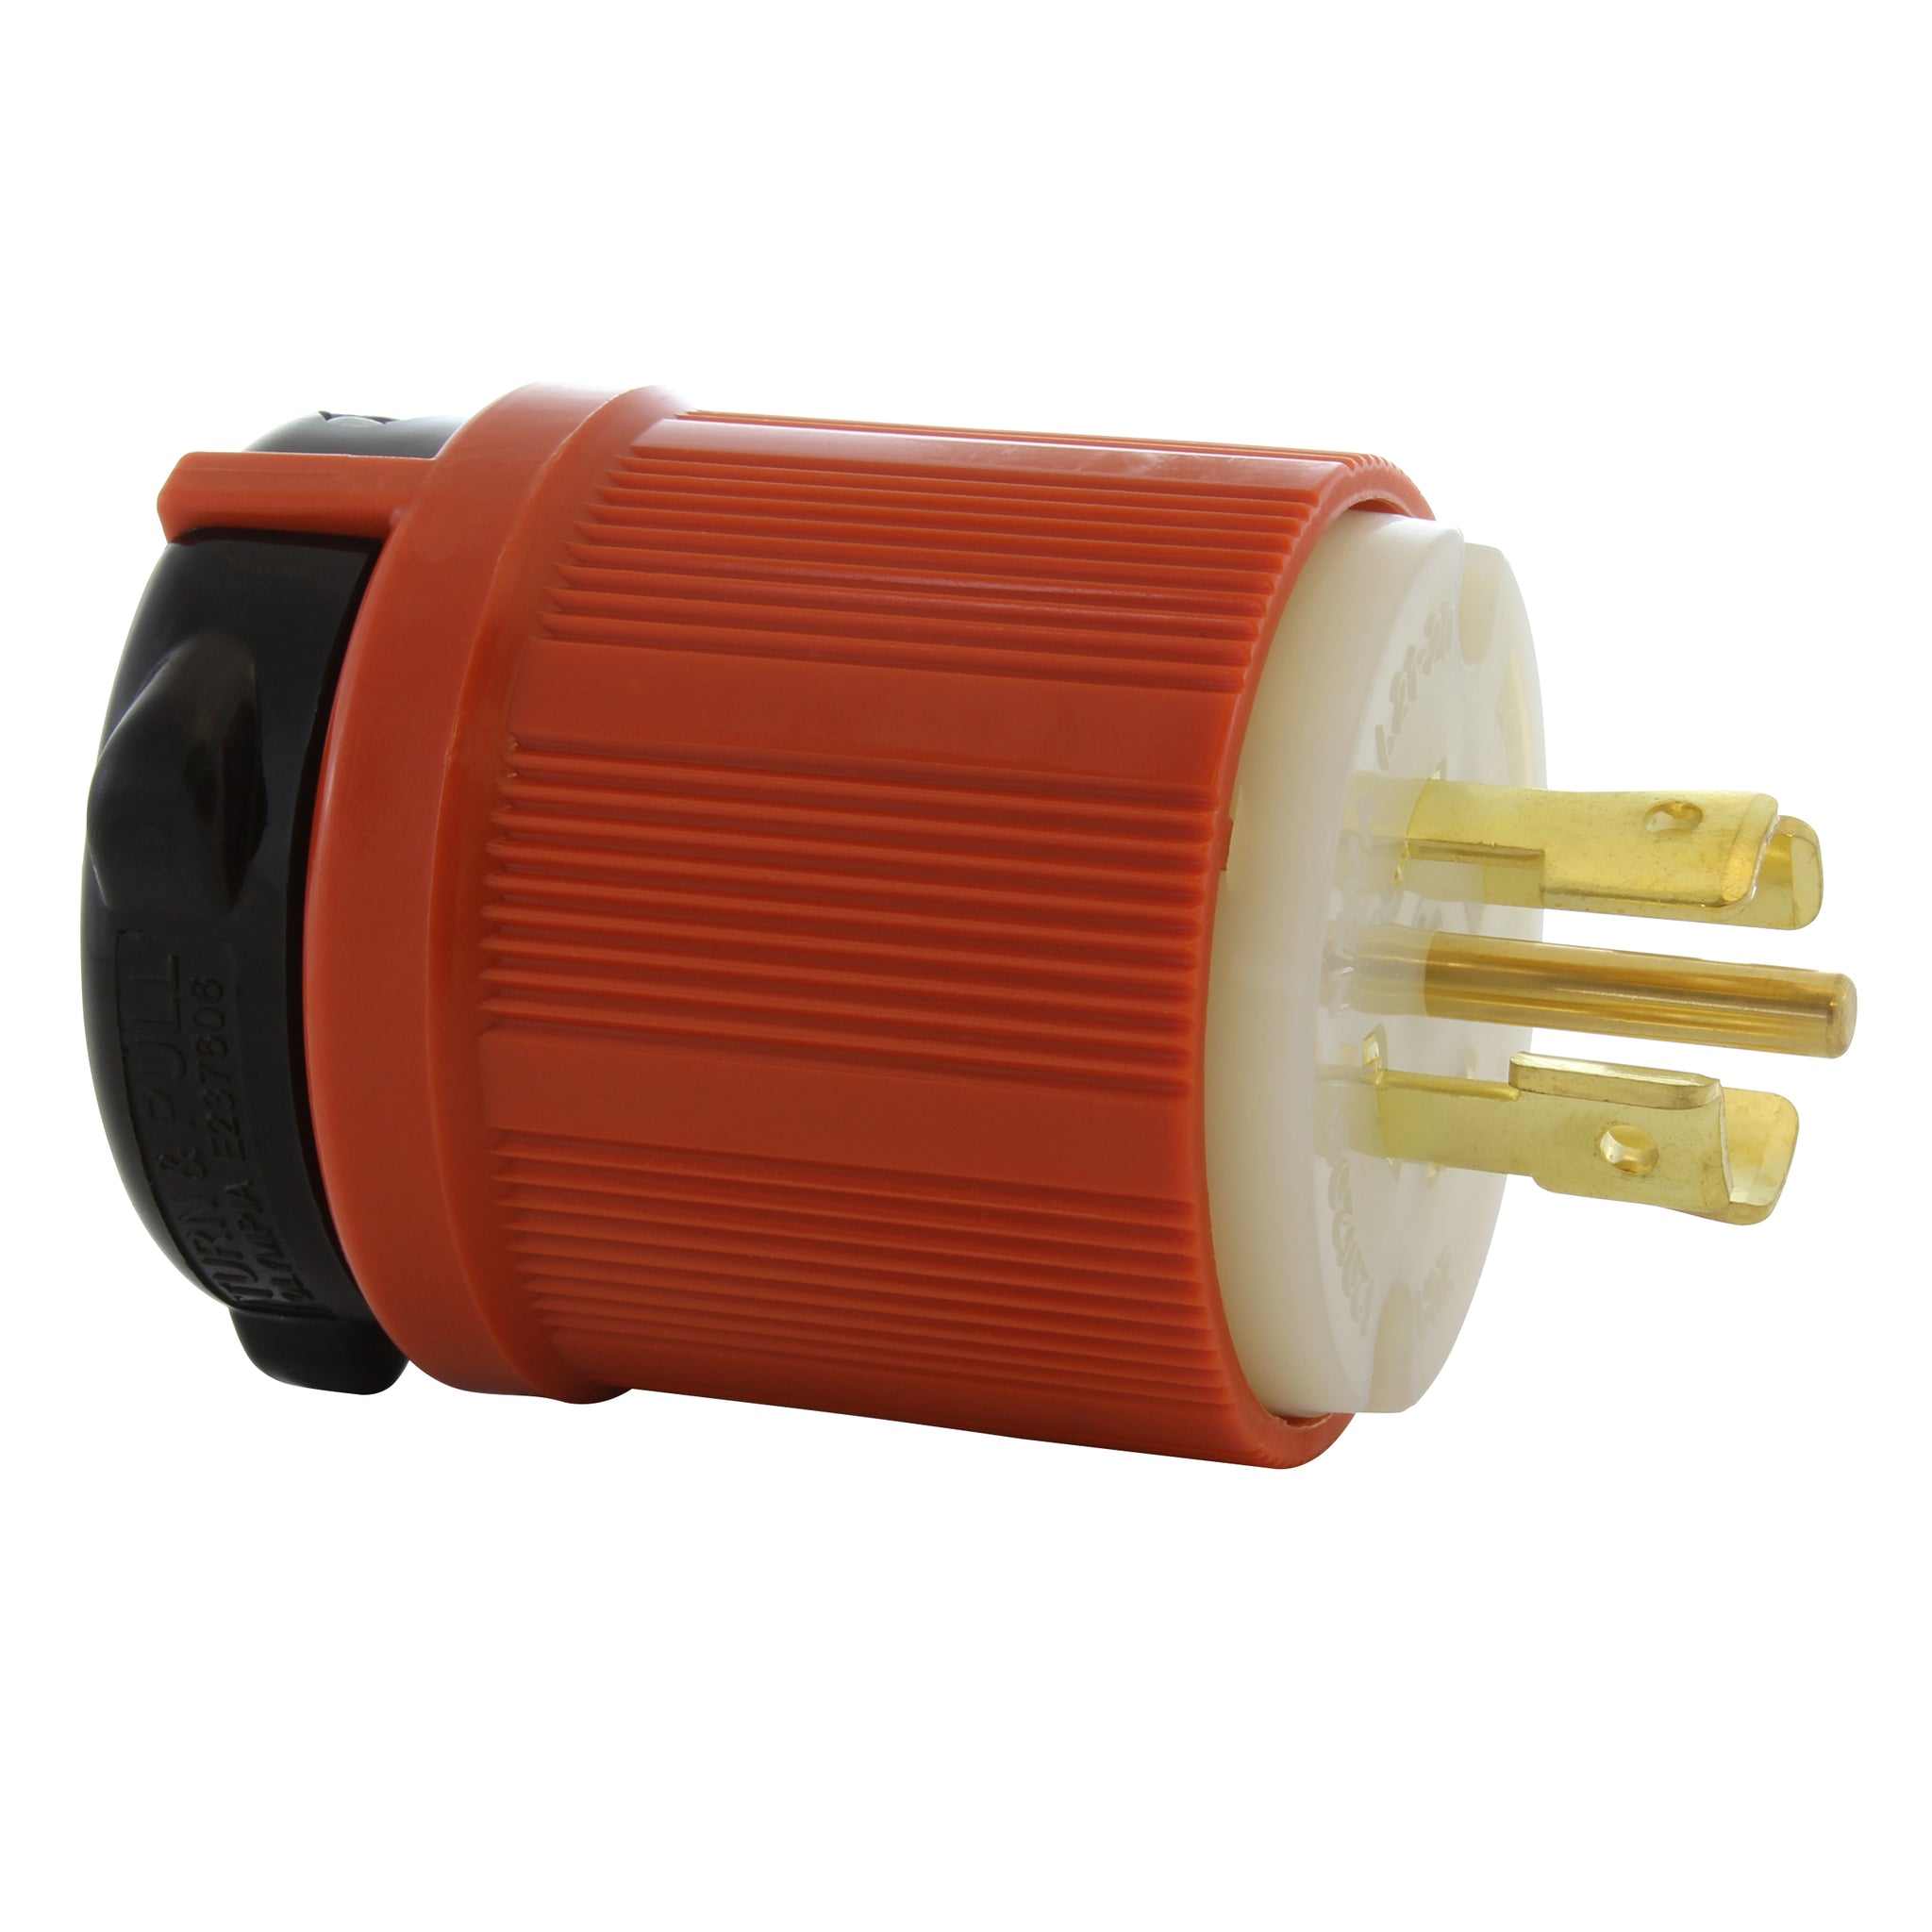 Nema L21 20p 20a 3 Phase 120208v 3py 5 Wire Locking Plug With Cul